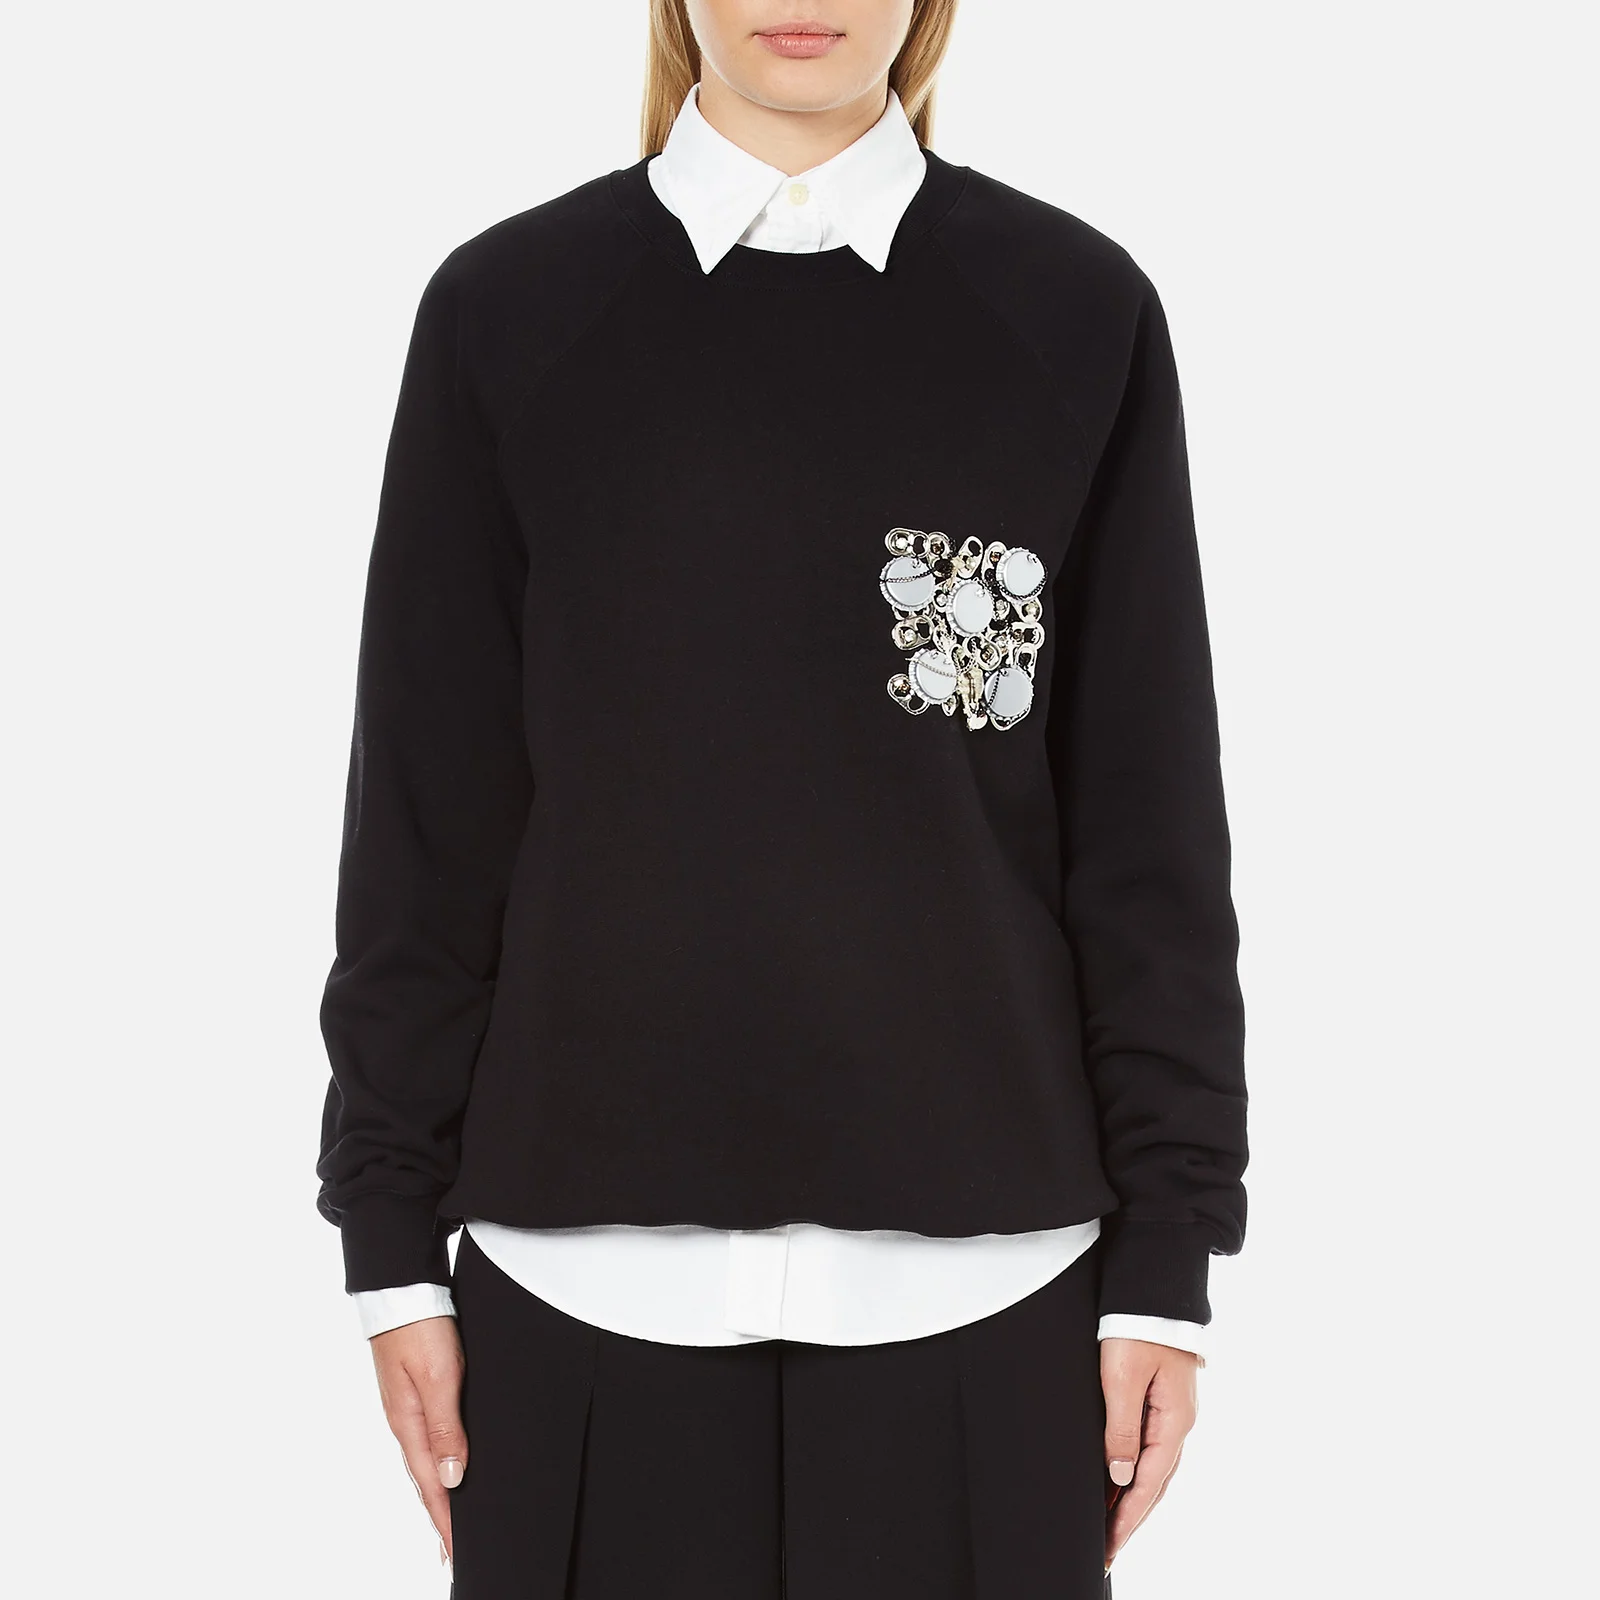 MSGM Women's Embellished Pocket Sweatshirt - Black Image 1